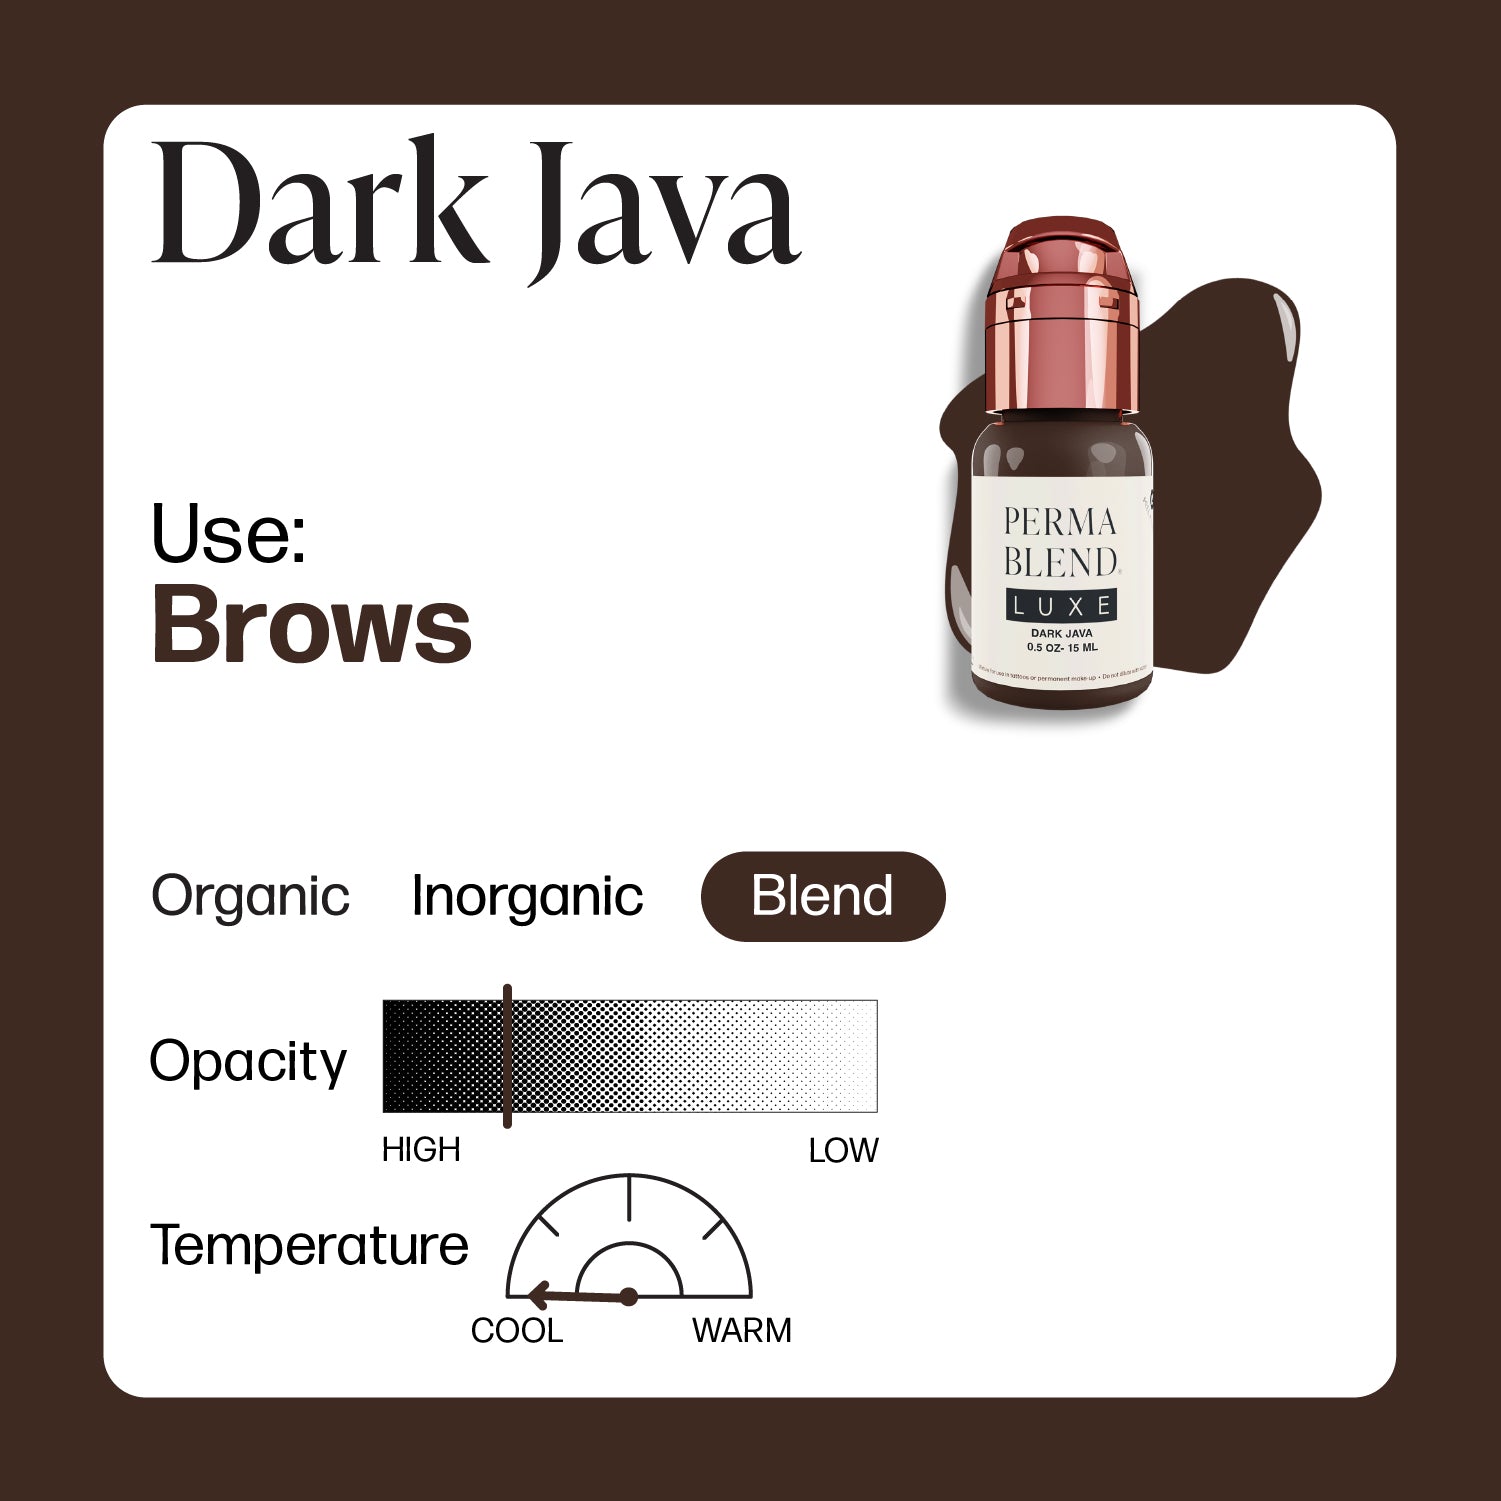 Dark Java - Perma Blend Luxe-Kallos